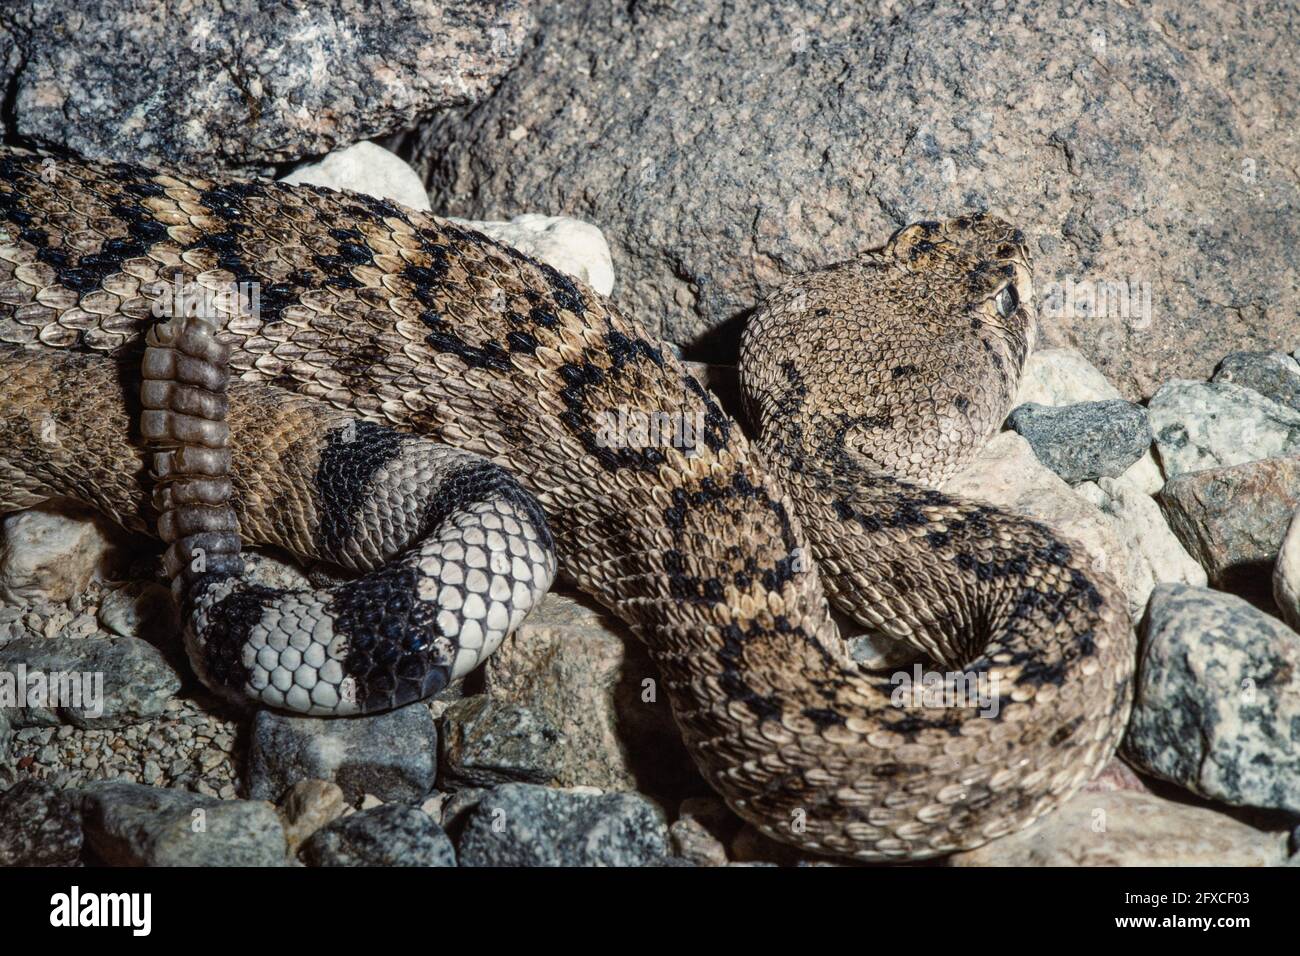 The Western Diamondback Rattlesnake or Texas Diamondback is a venomous snake found in the southwestern U.S. and northern Mexico. Stock Photo